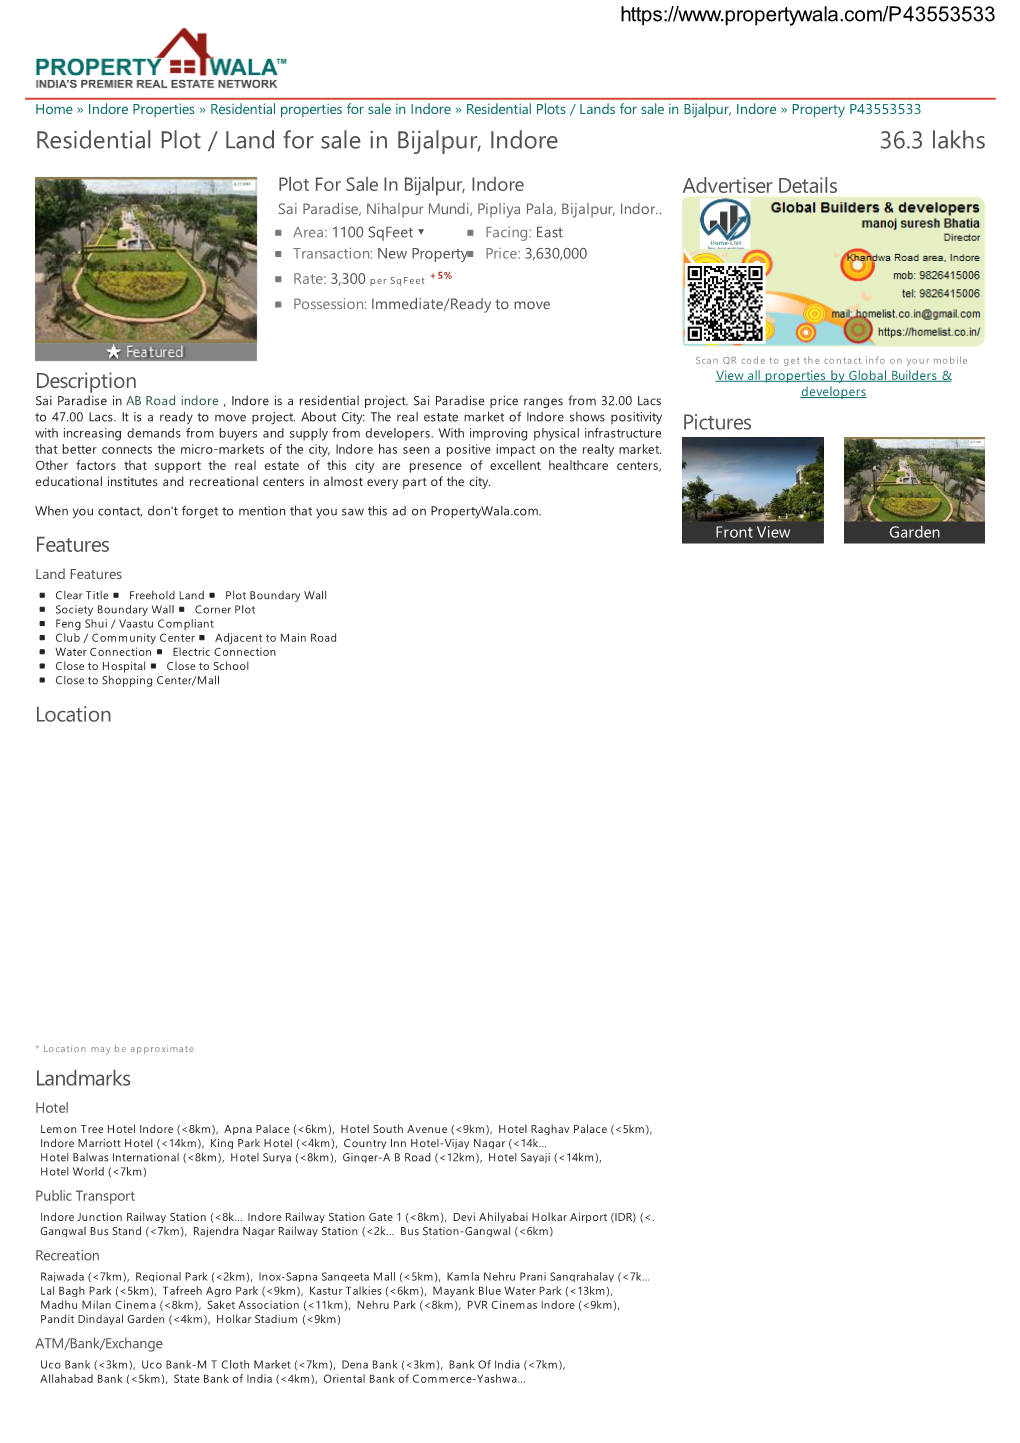 Residential Plot / Land for Sale in Bijalpur, Indore (P43553533